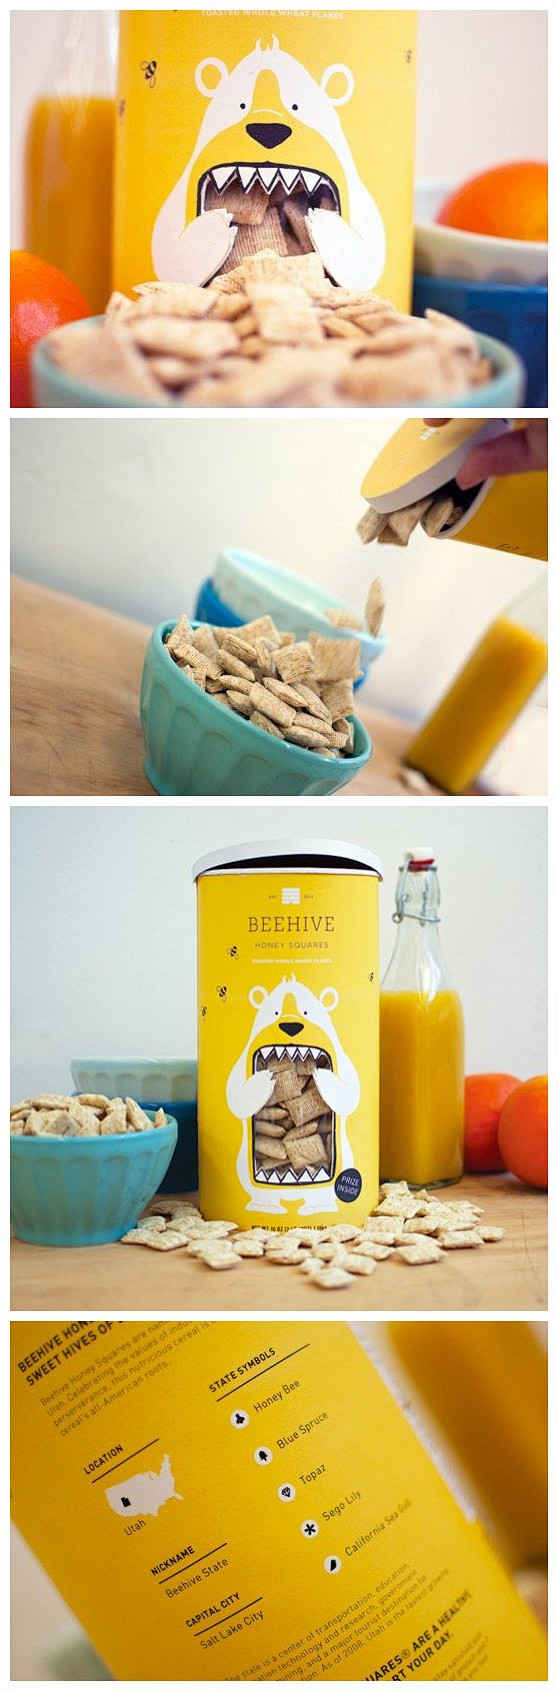 Beehive——可爱的饼干包装